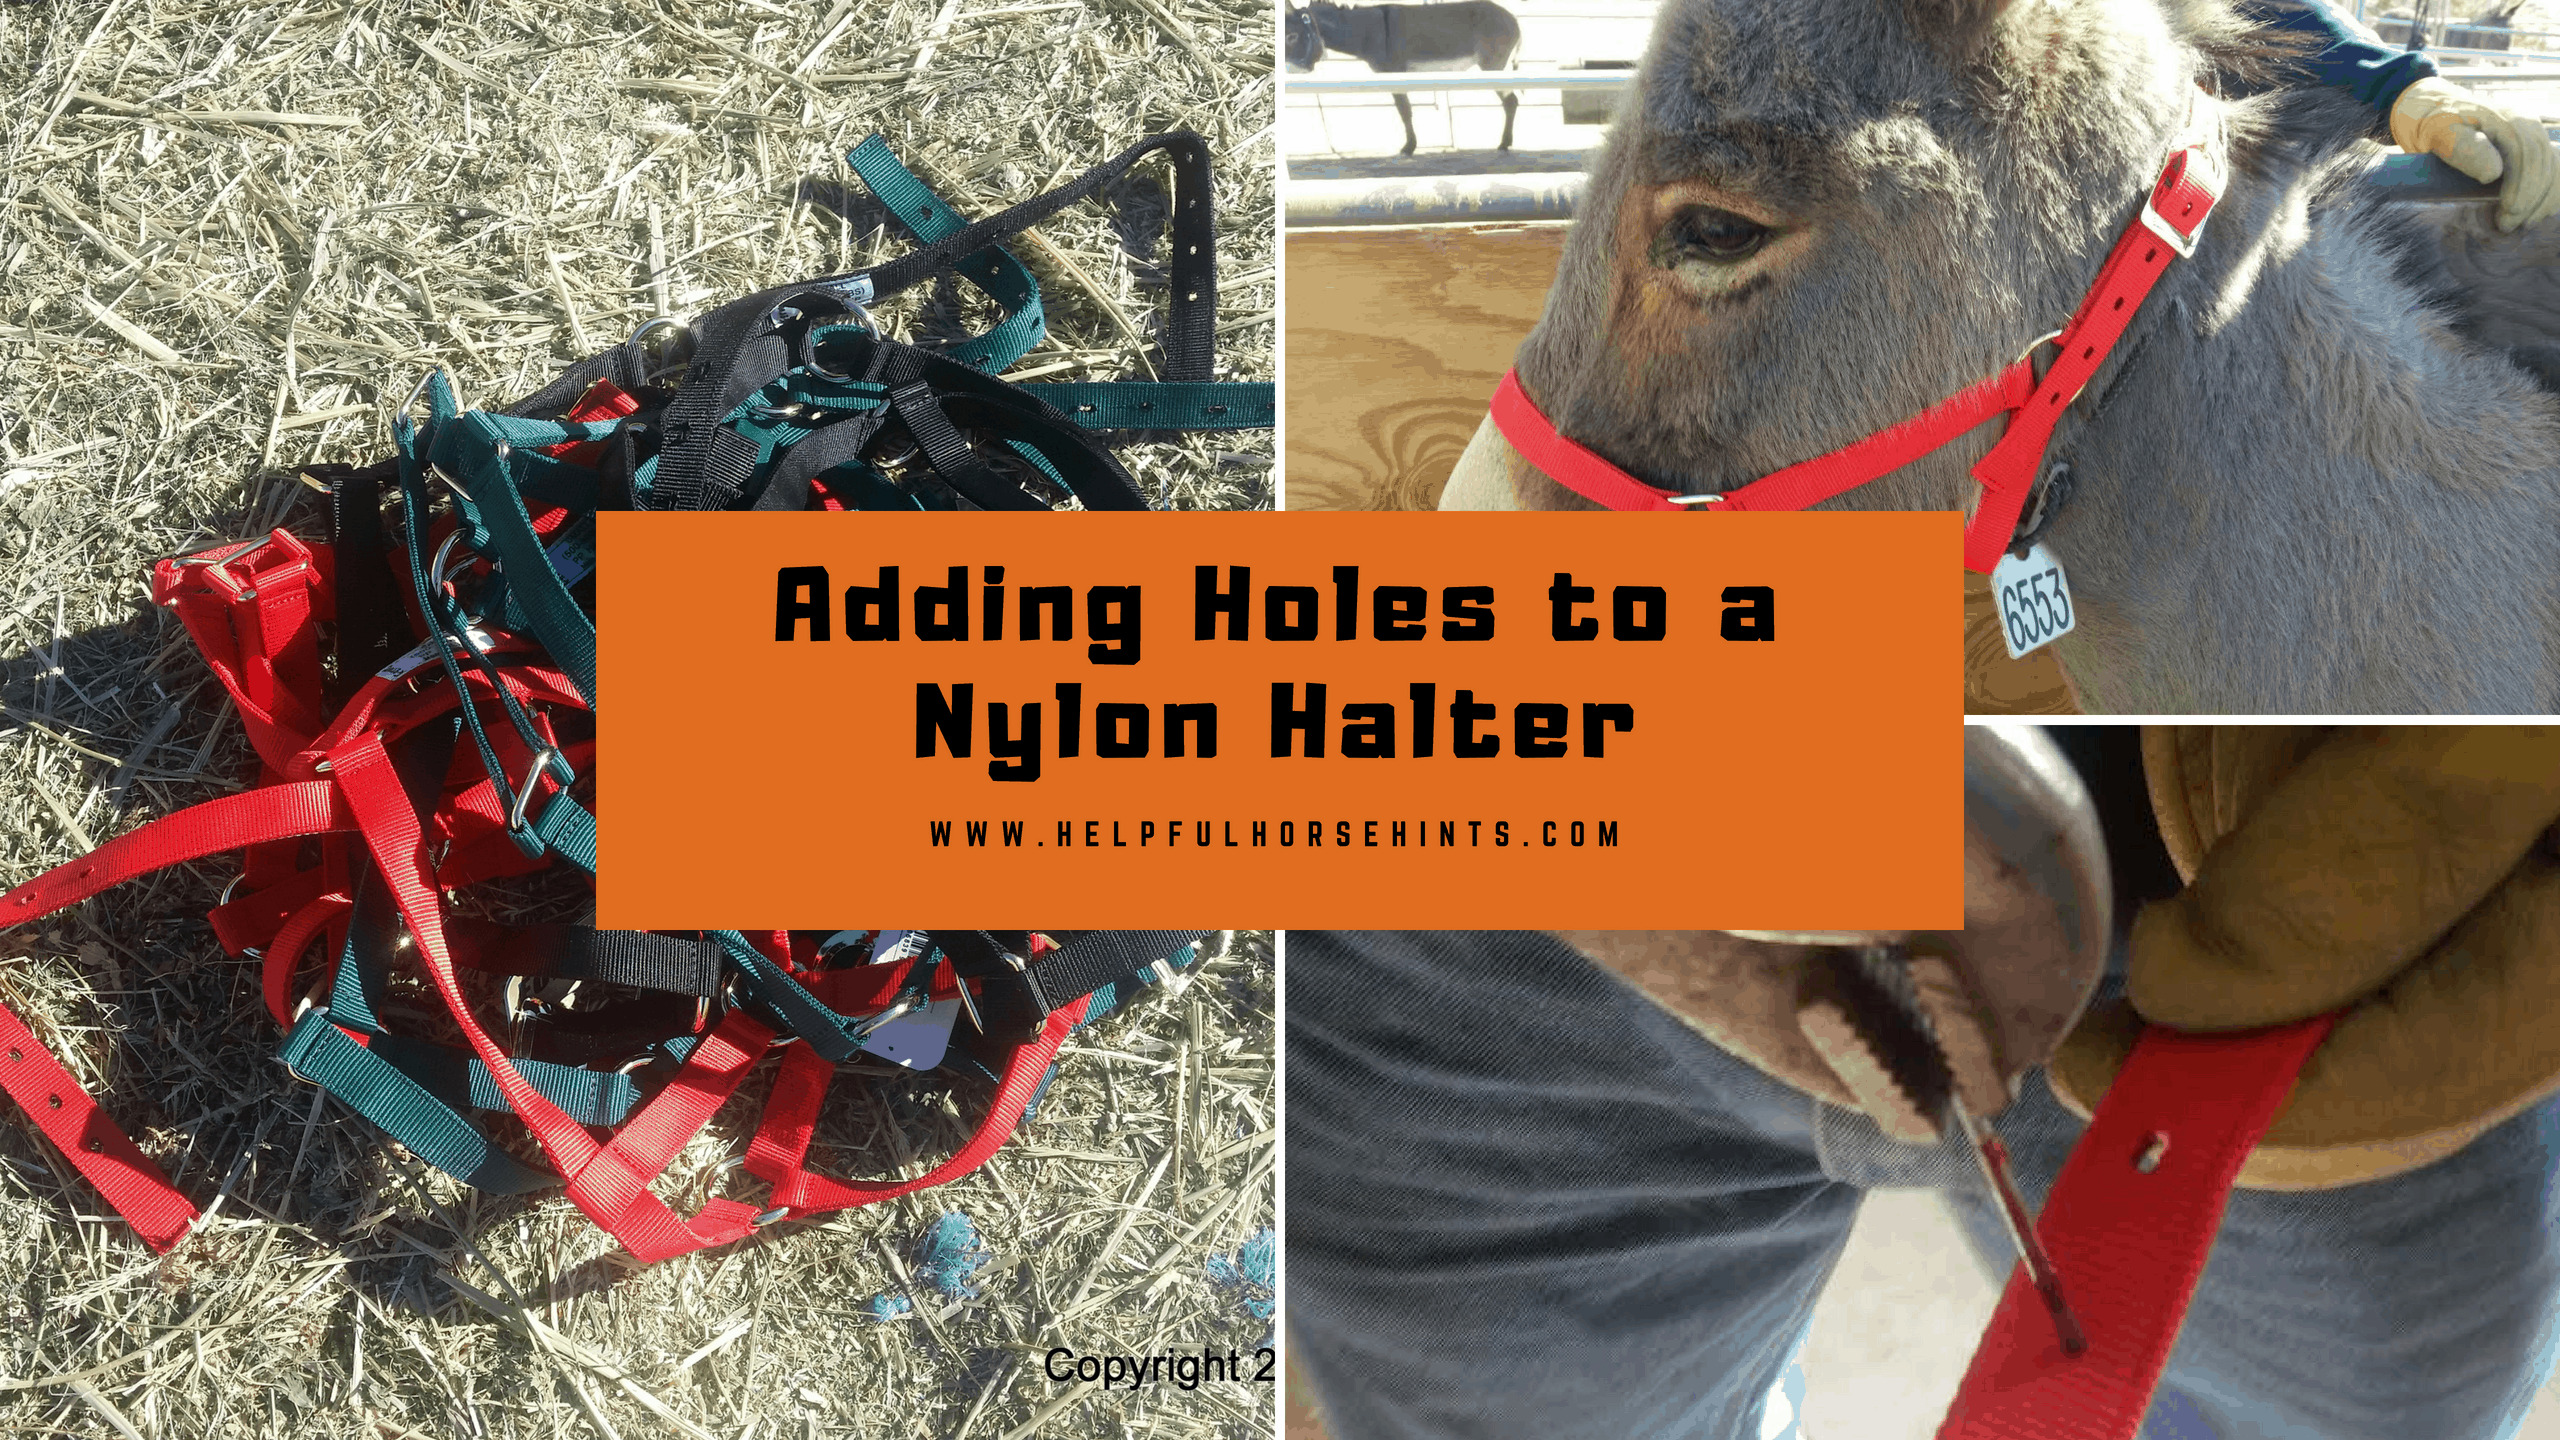 Adding Holes to a Nylon Halter